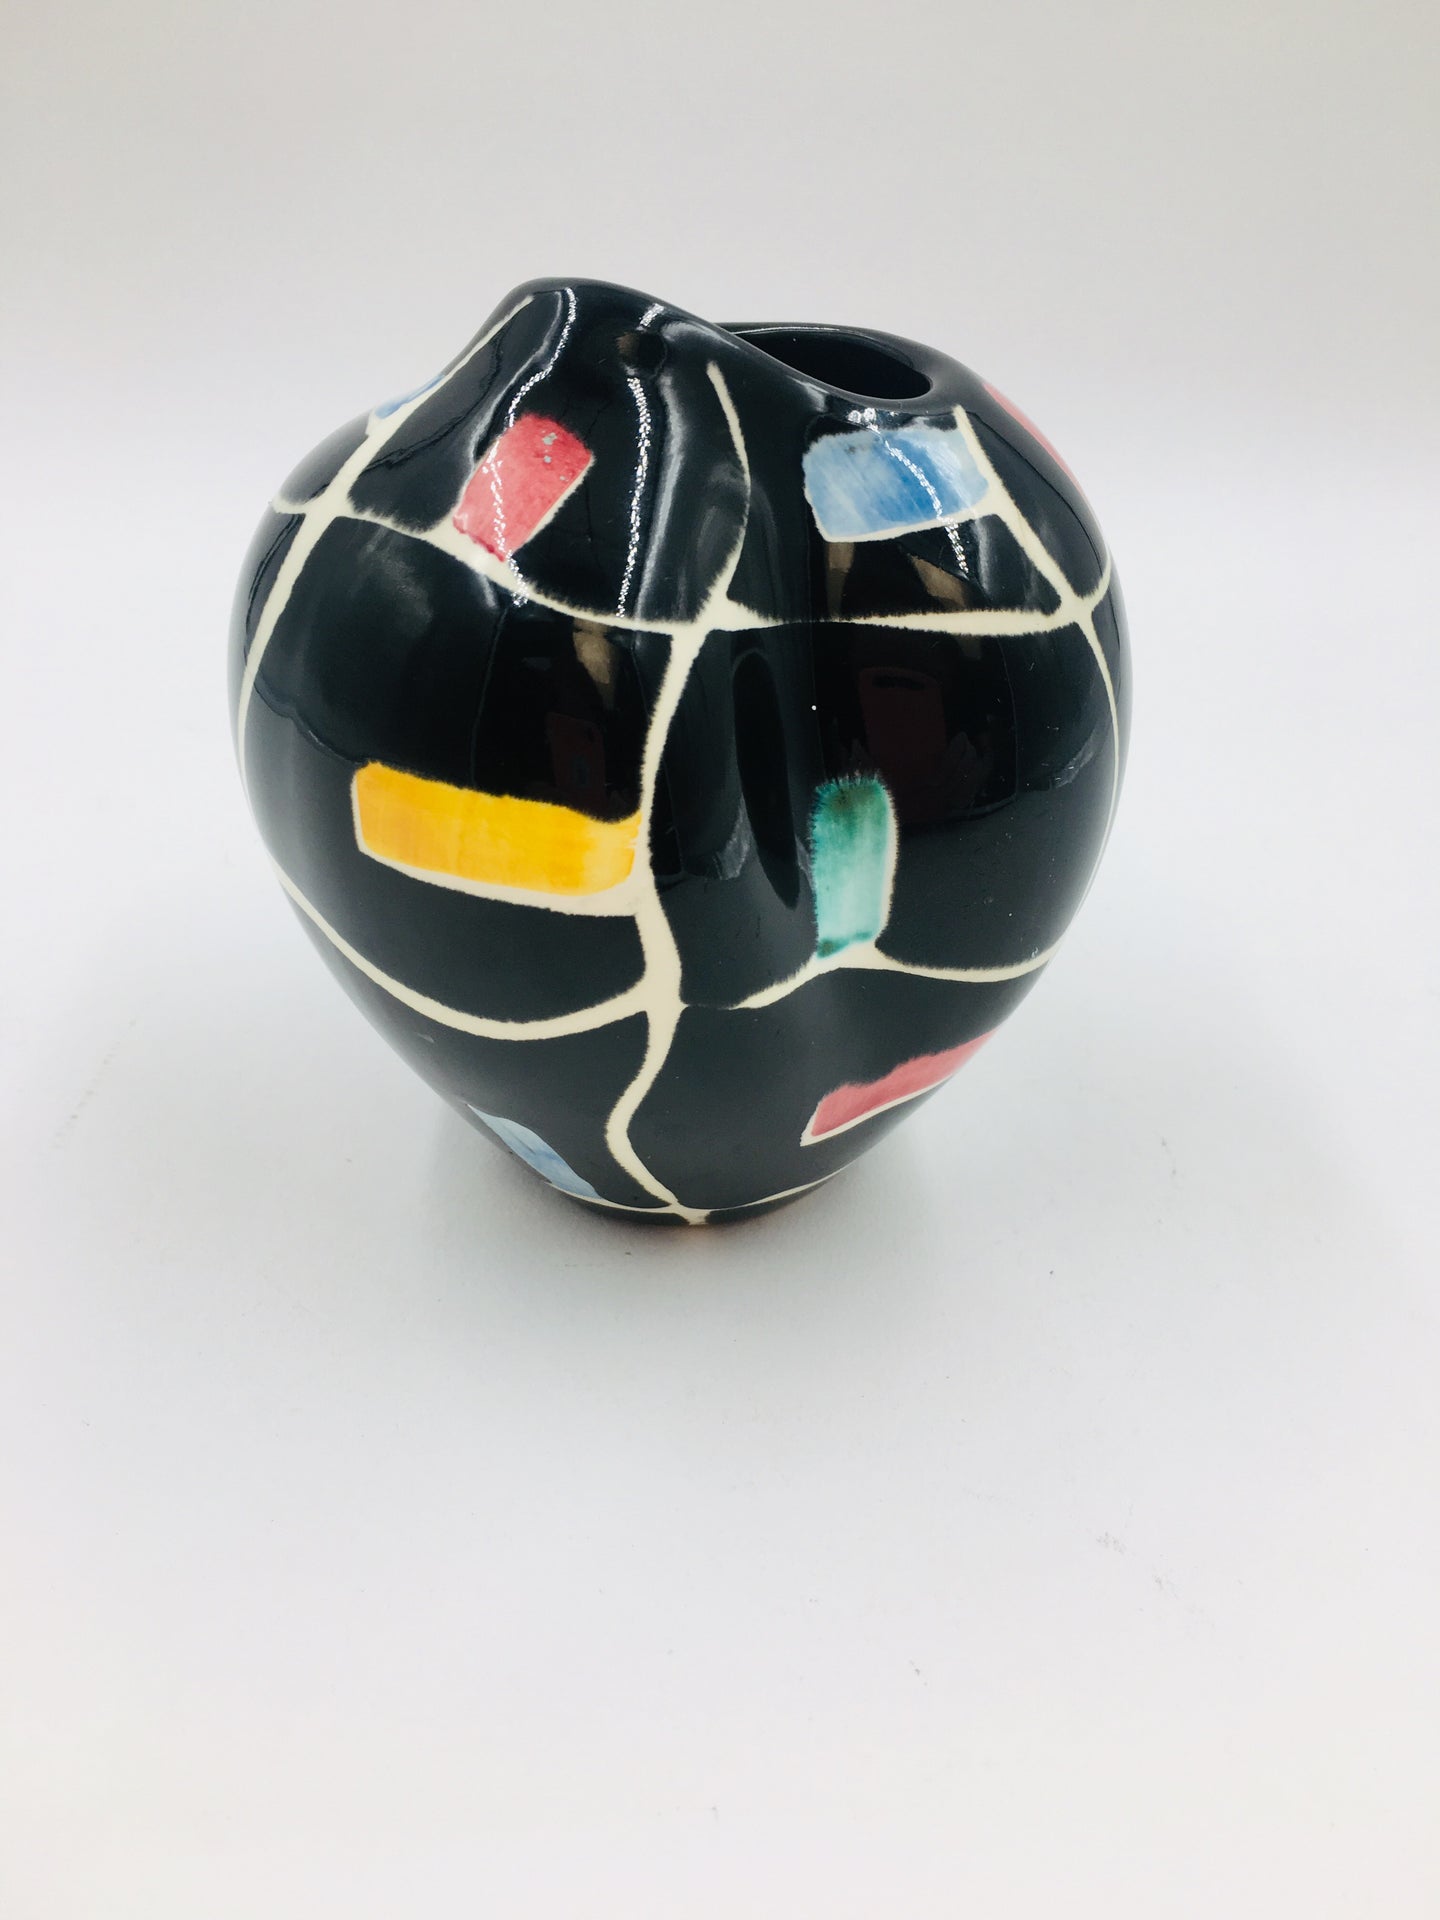 German Schmider Heart or Butt Vase by Anneliese Beckh, 1956